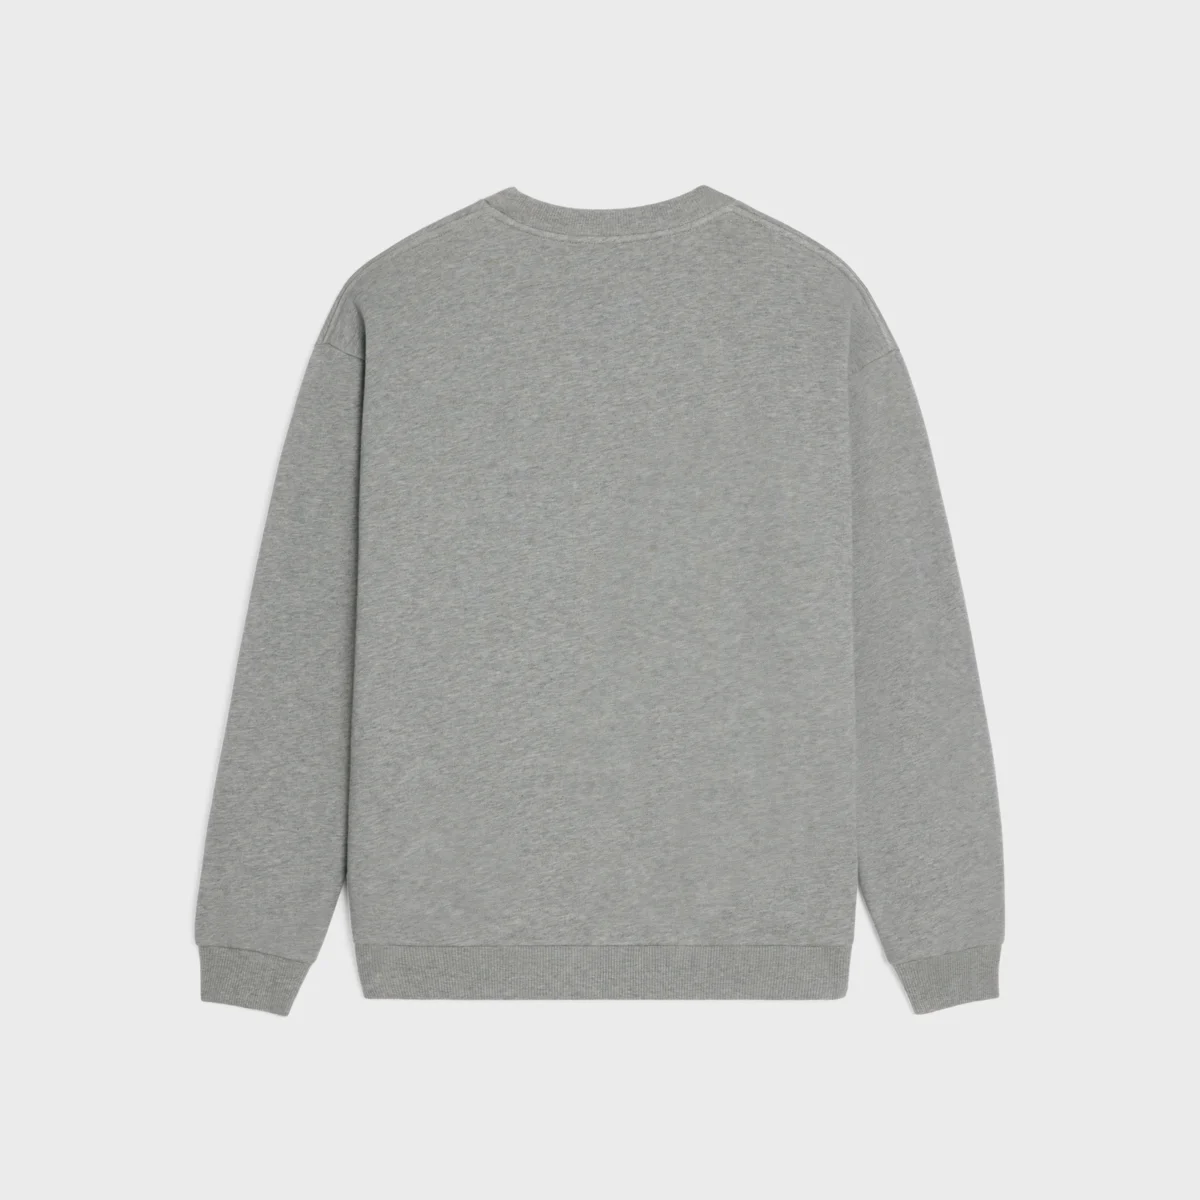 celine gray sweatshirt